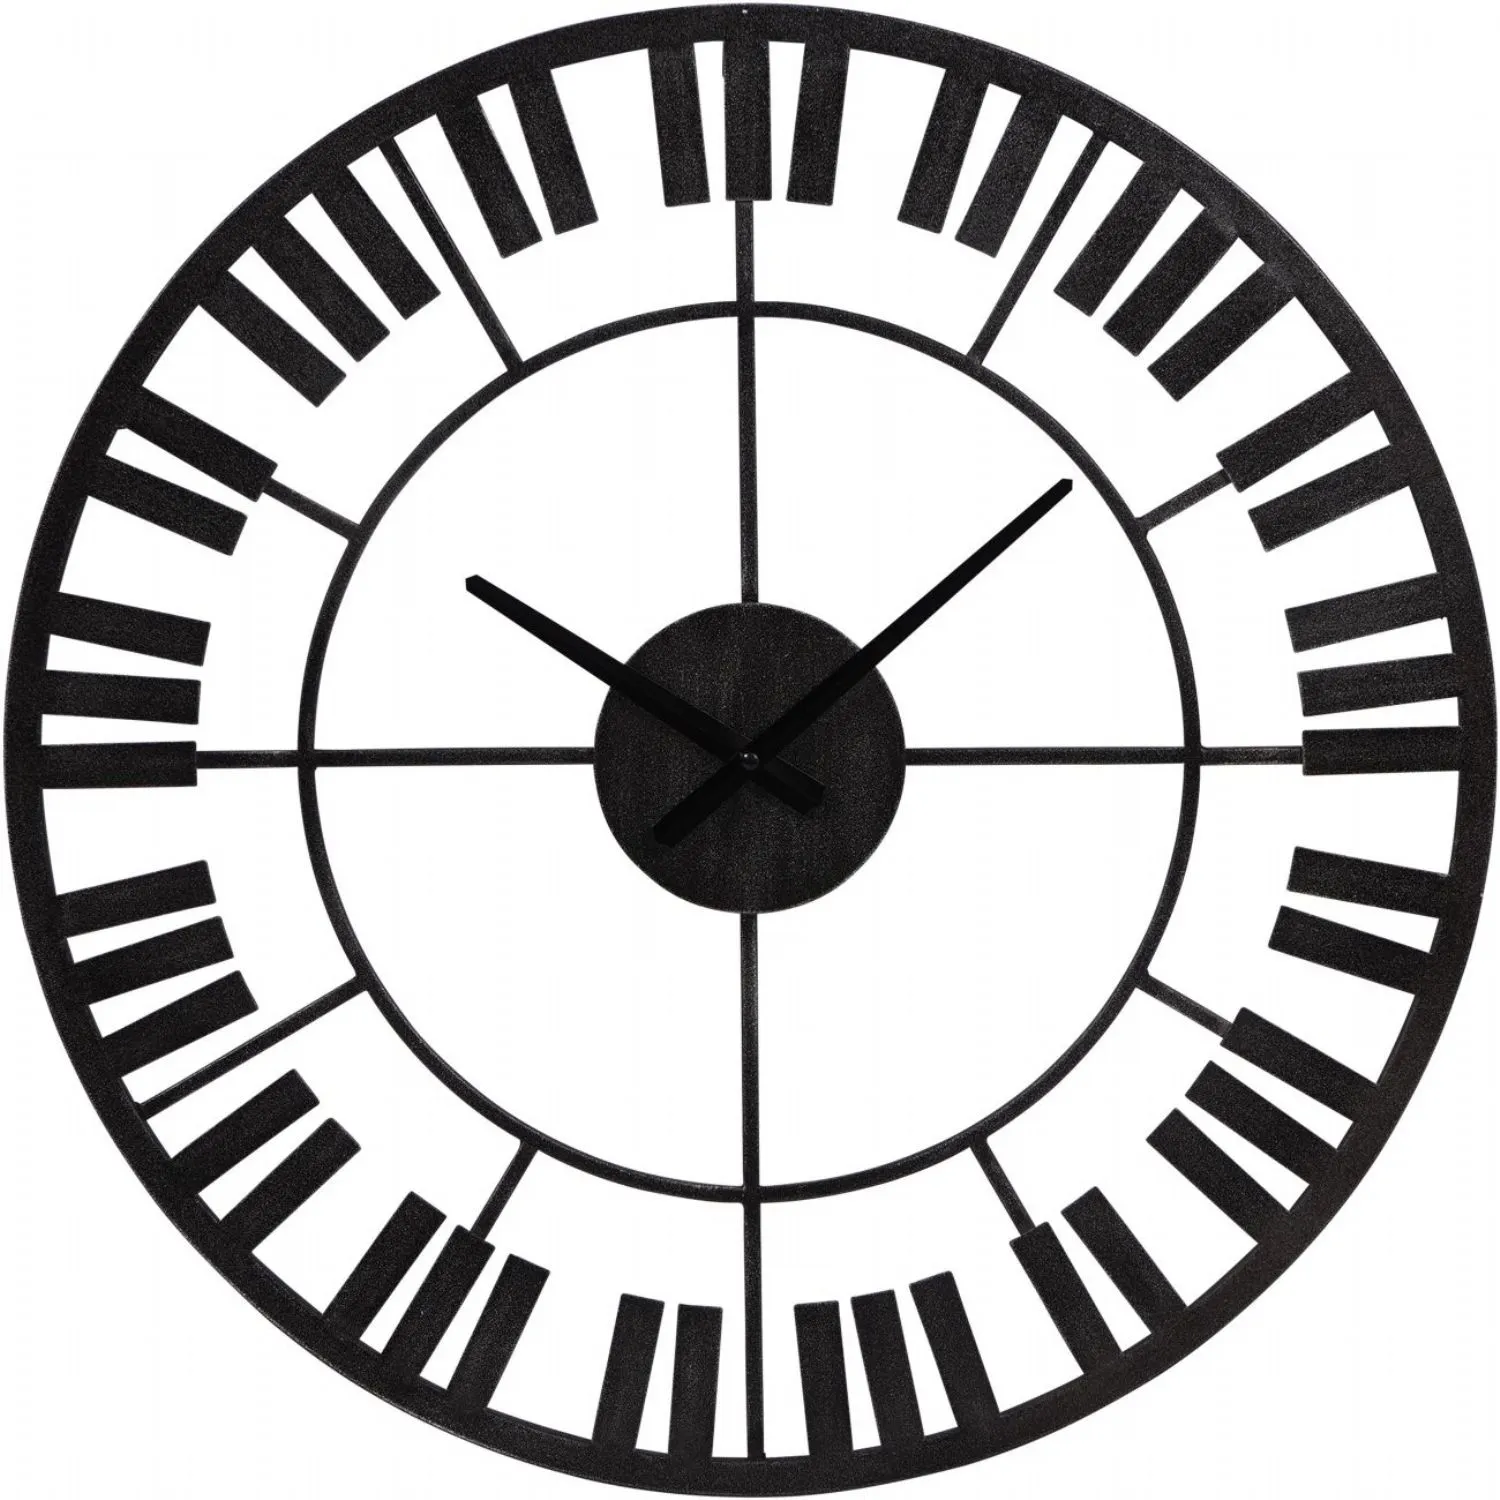 Piano Skeleton Outdoor Metal Wall Clock